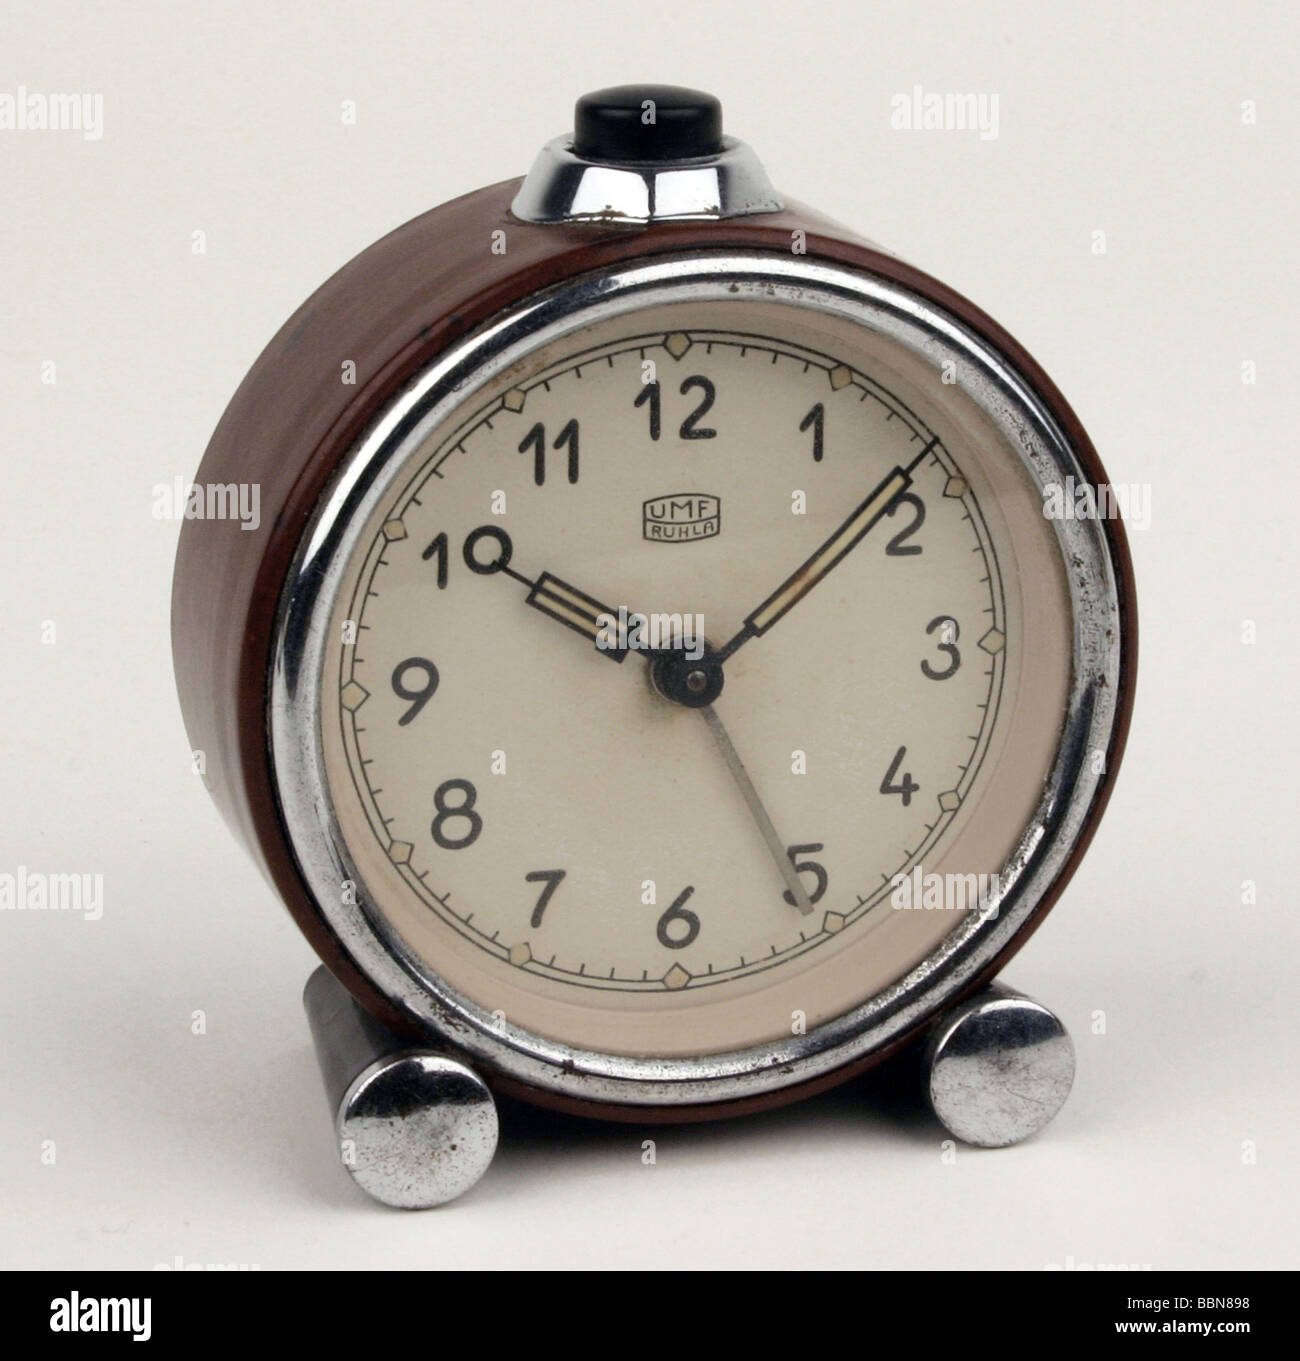 clocks, mechanic alarm clock Kal. 67, Bakelit body, made by VEB Uhren- und  Maschinenfabrik Ruhla, GDR, 1950s Stock Photo - Alamy